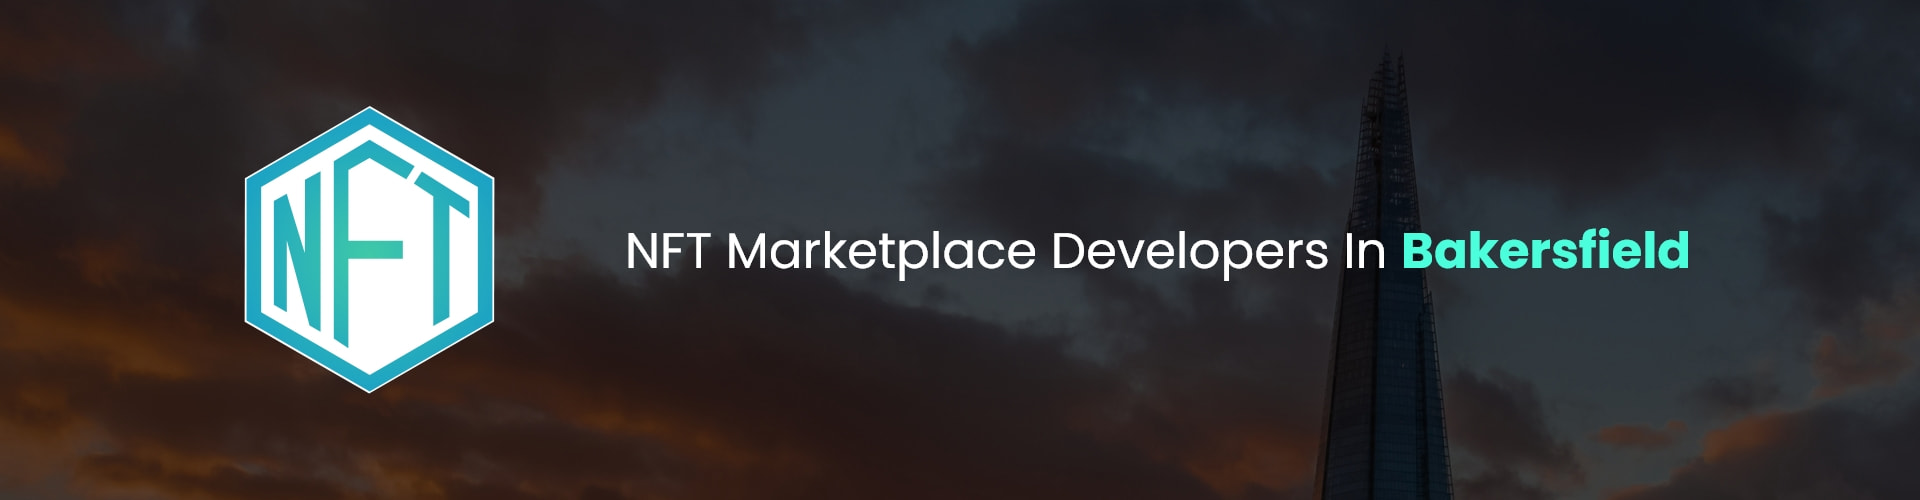 hire nft marketplace developers in bakersfield